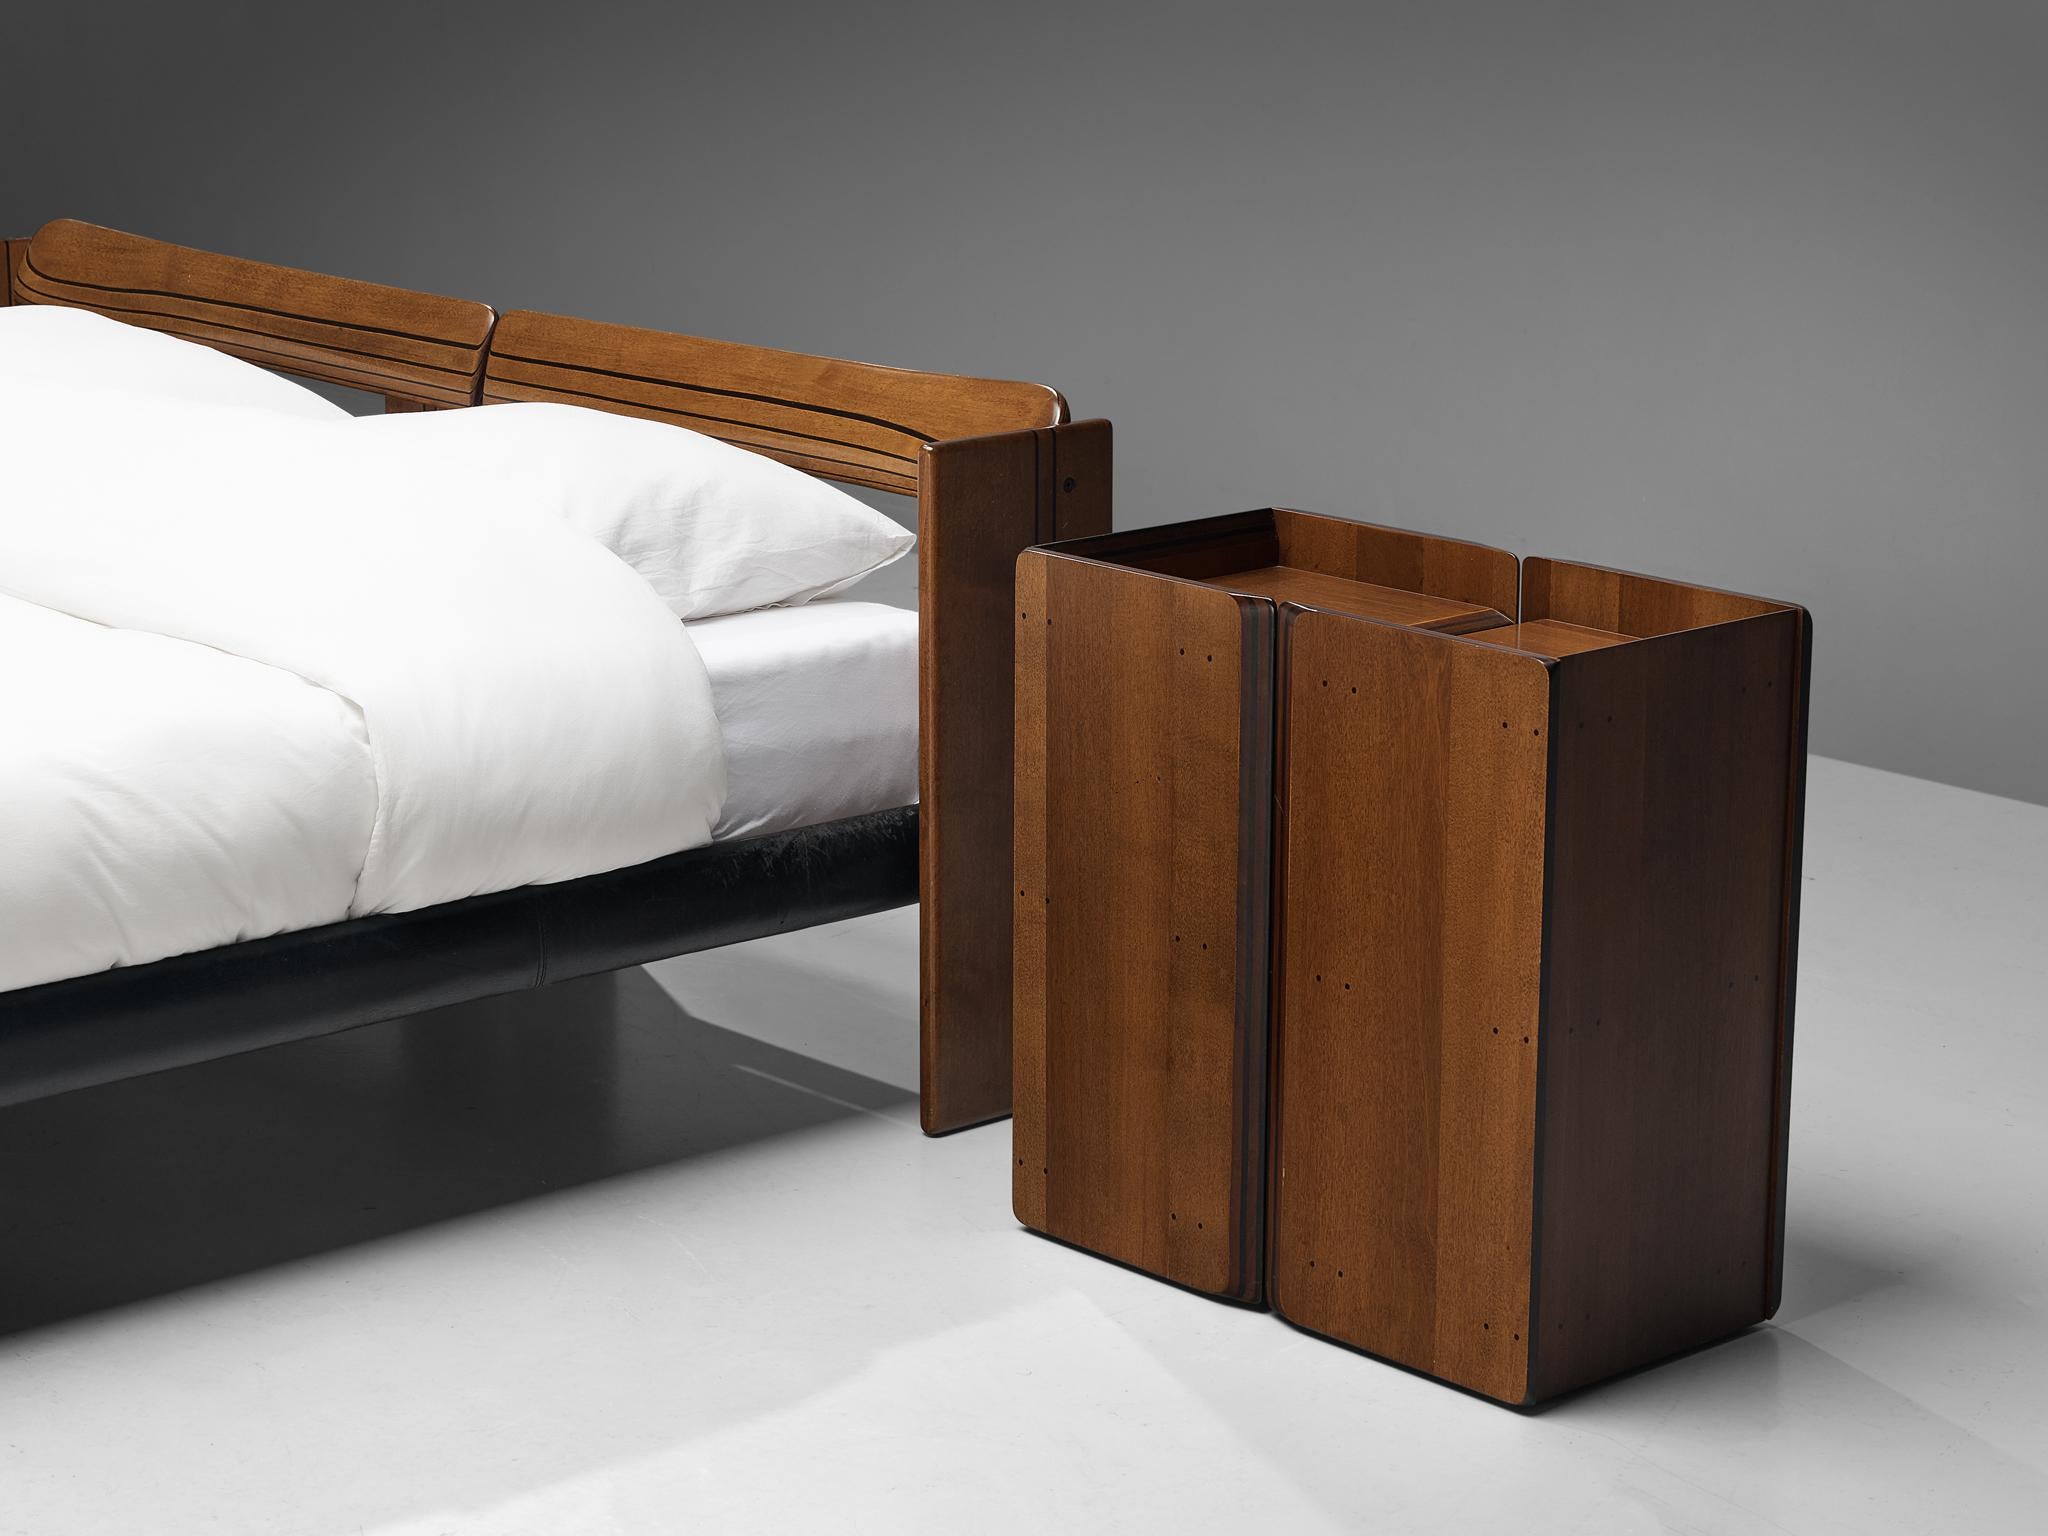 Italian Afra & Tobia Scarpa for Maxalto 'Artona' Bed and Night Stands in Walnut